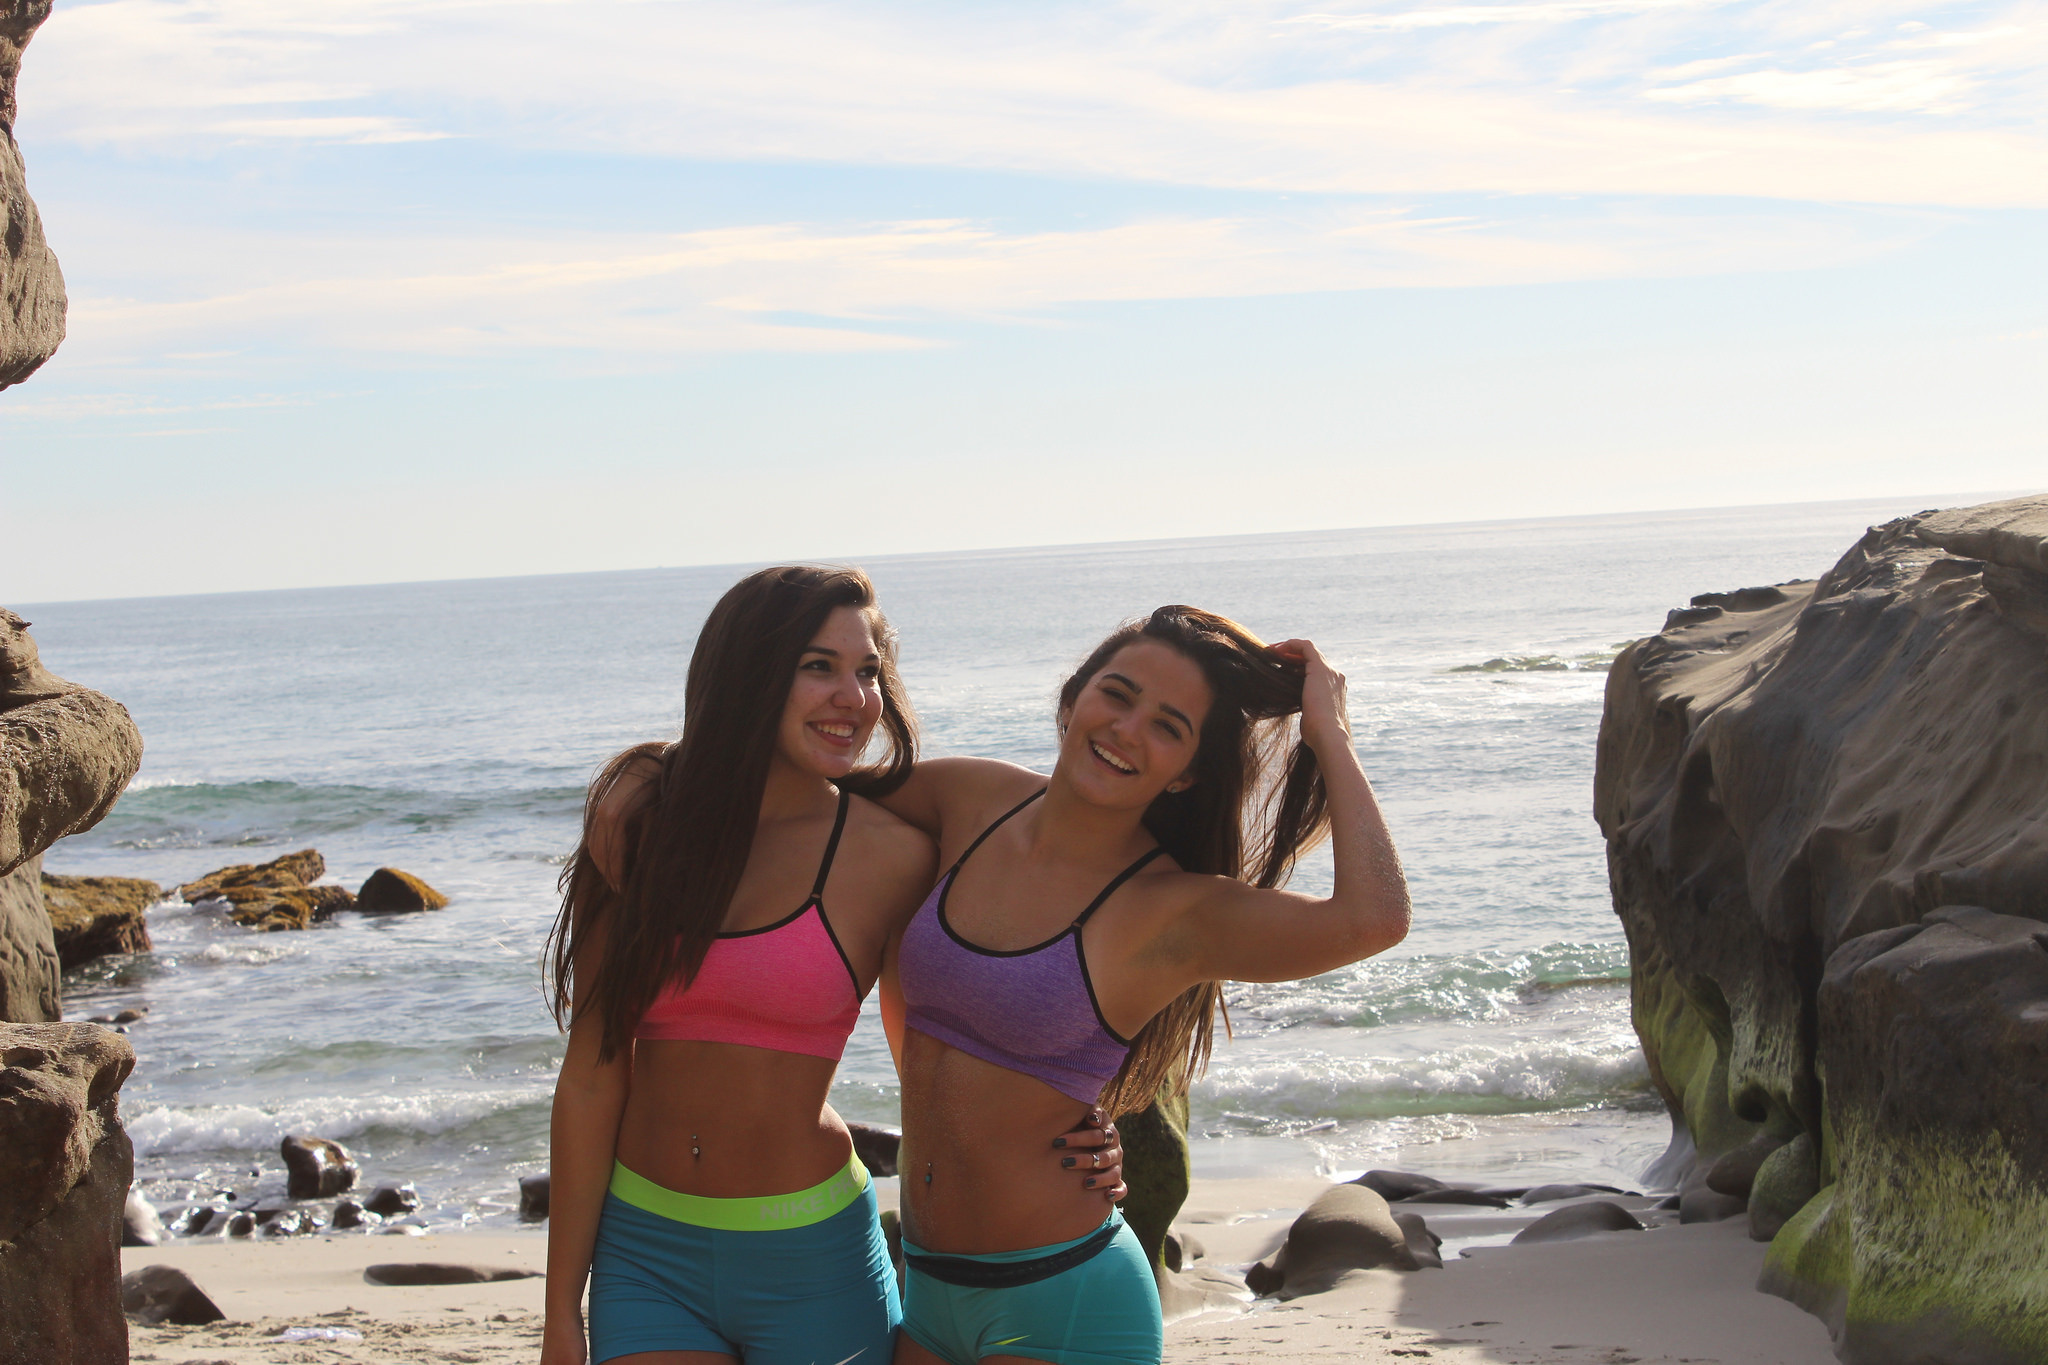 Two Hot Bikini and Spandex Teens Posing